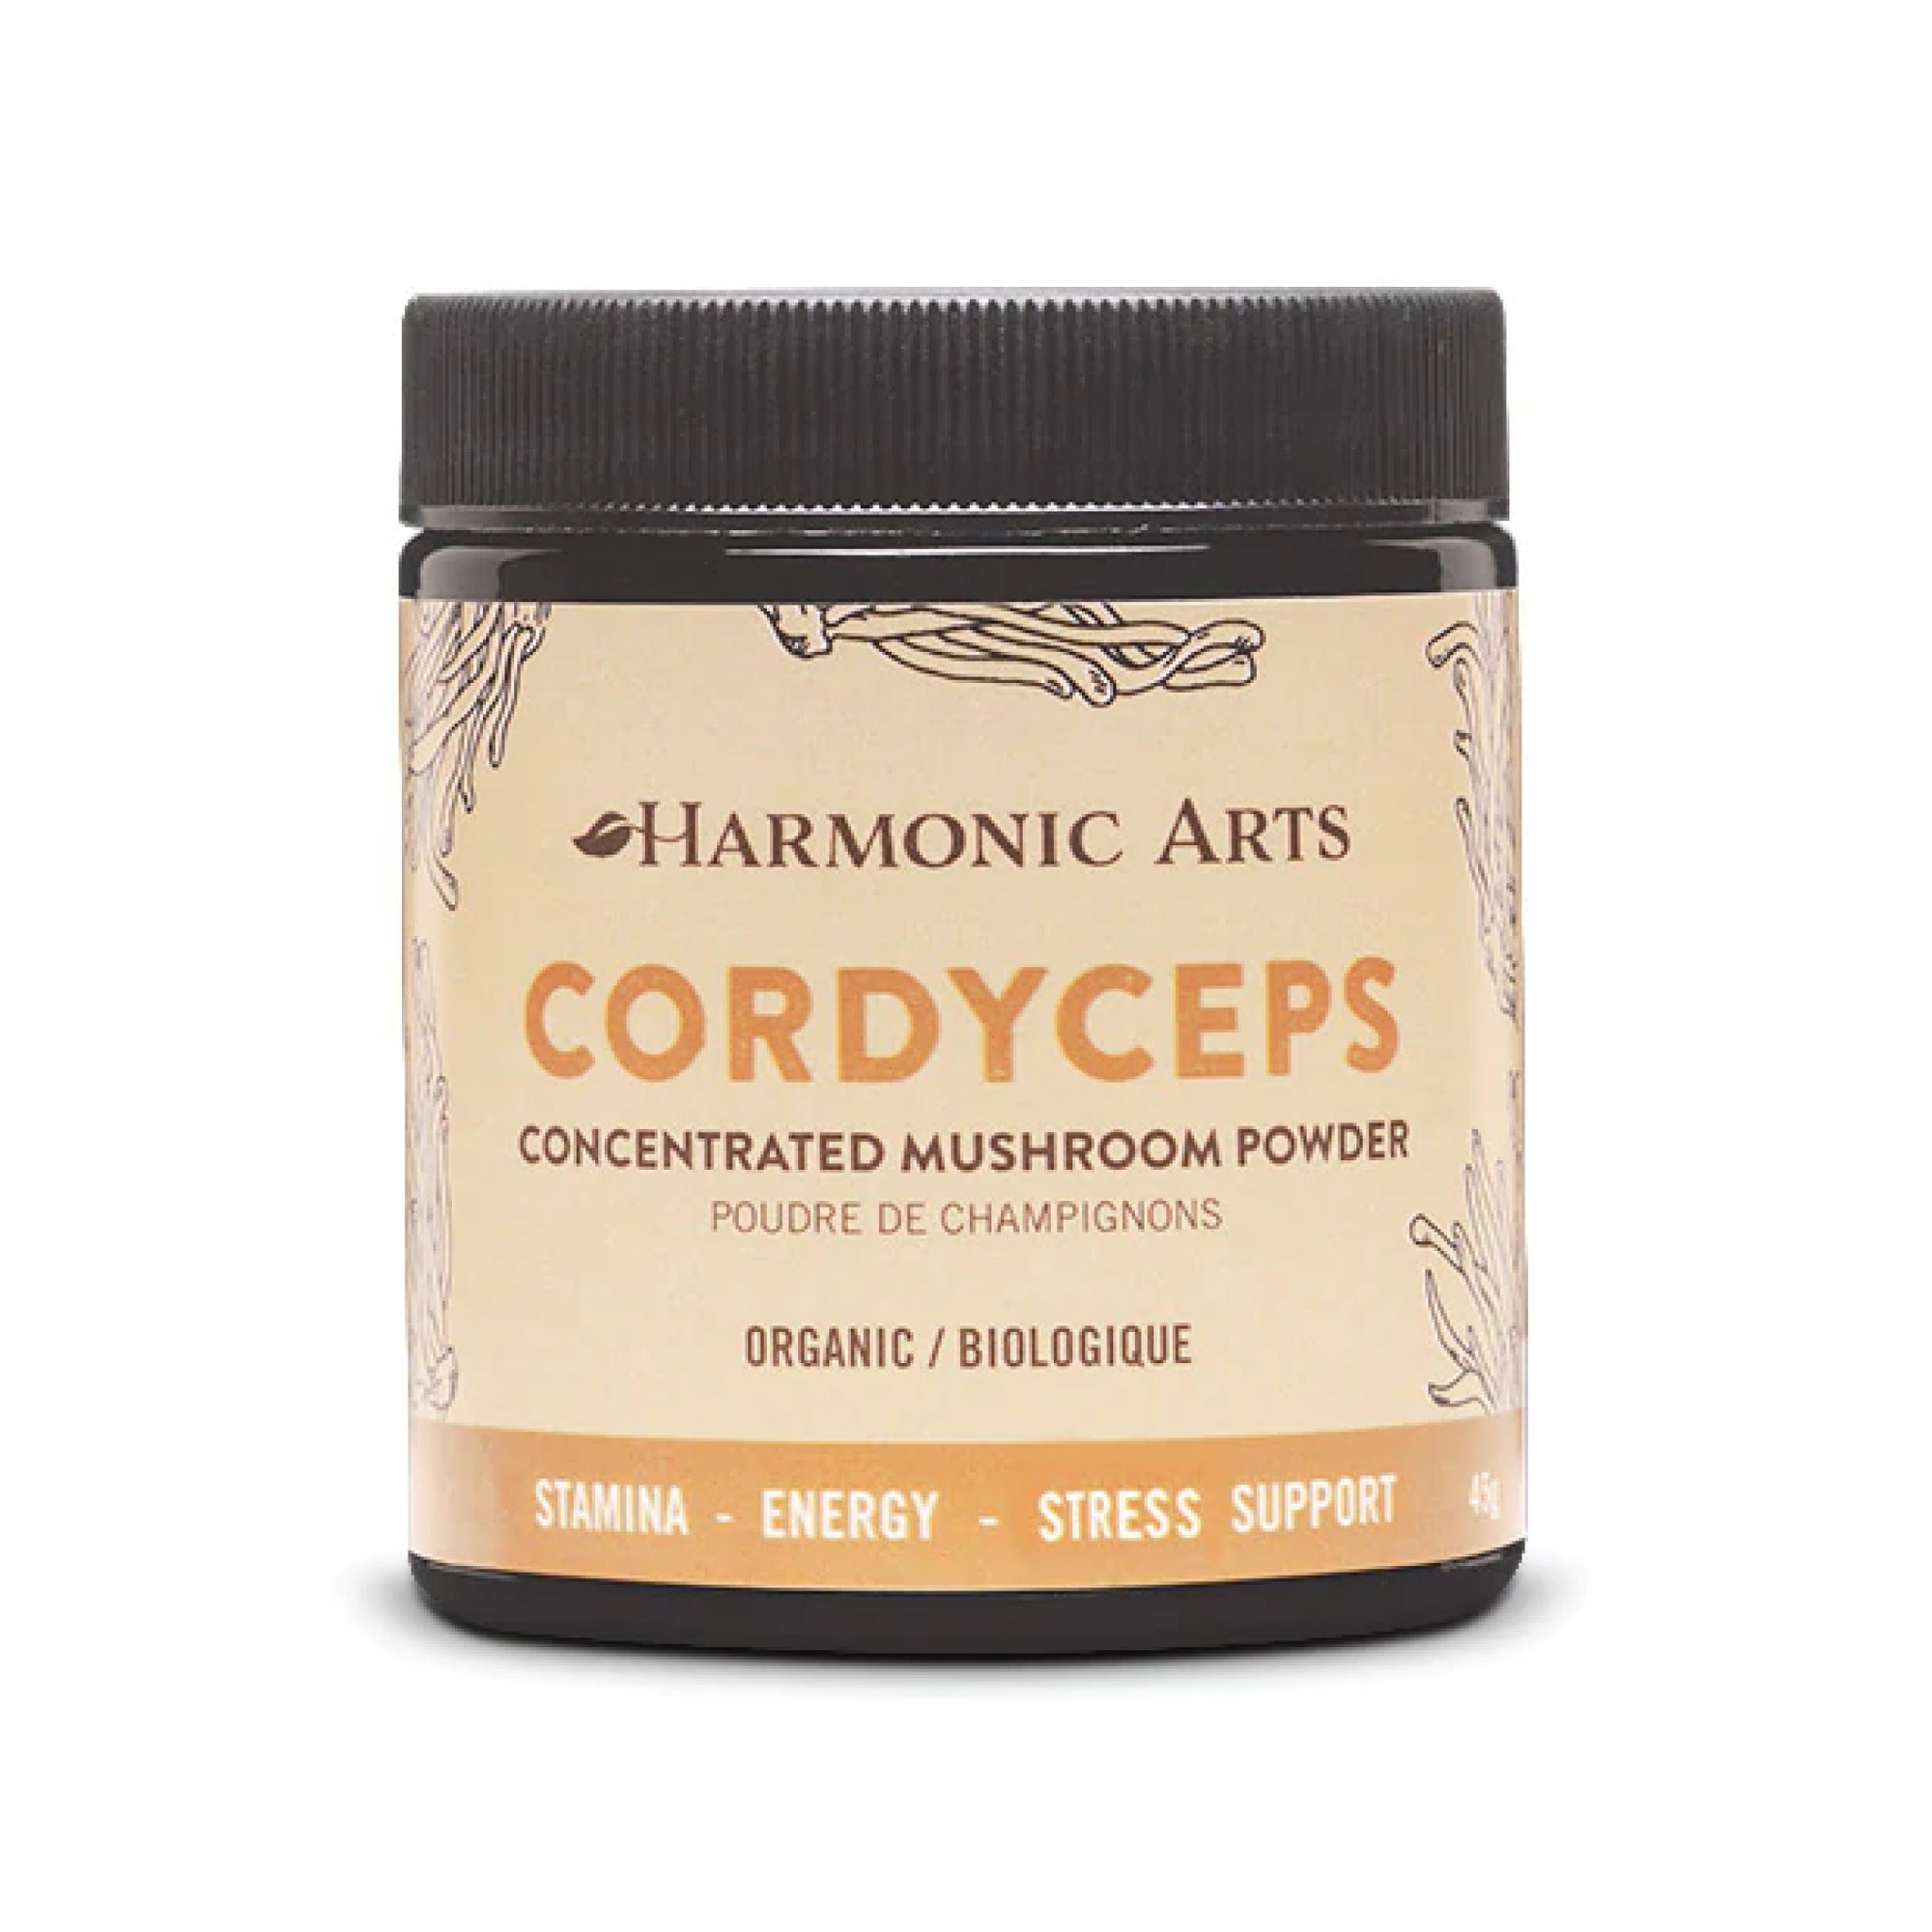 Harmonic Arts Organic Cordyceps Concentrated Mushroom Powder 45g